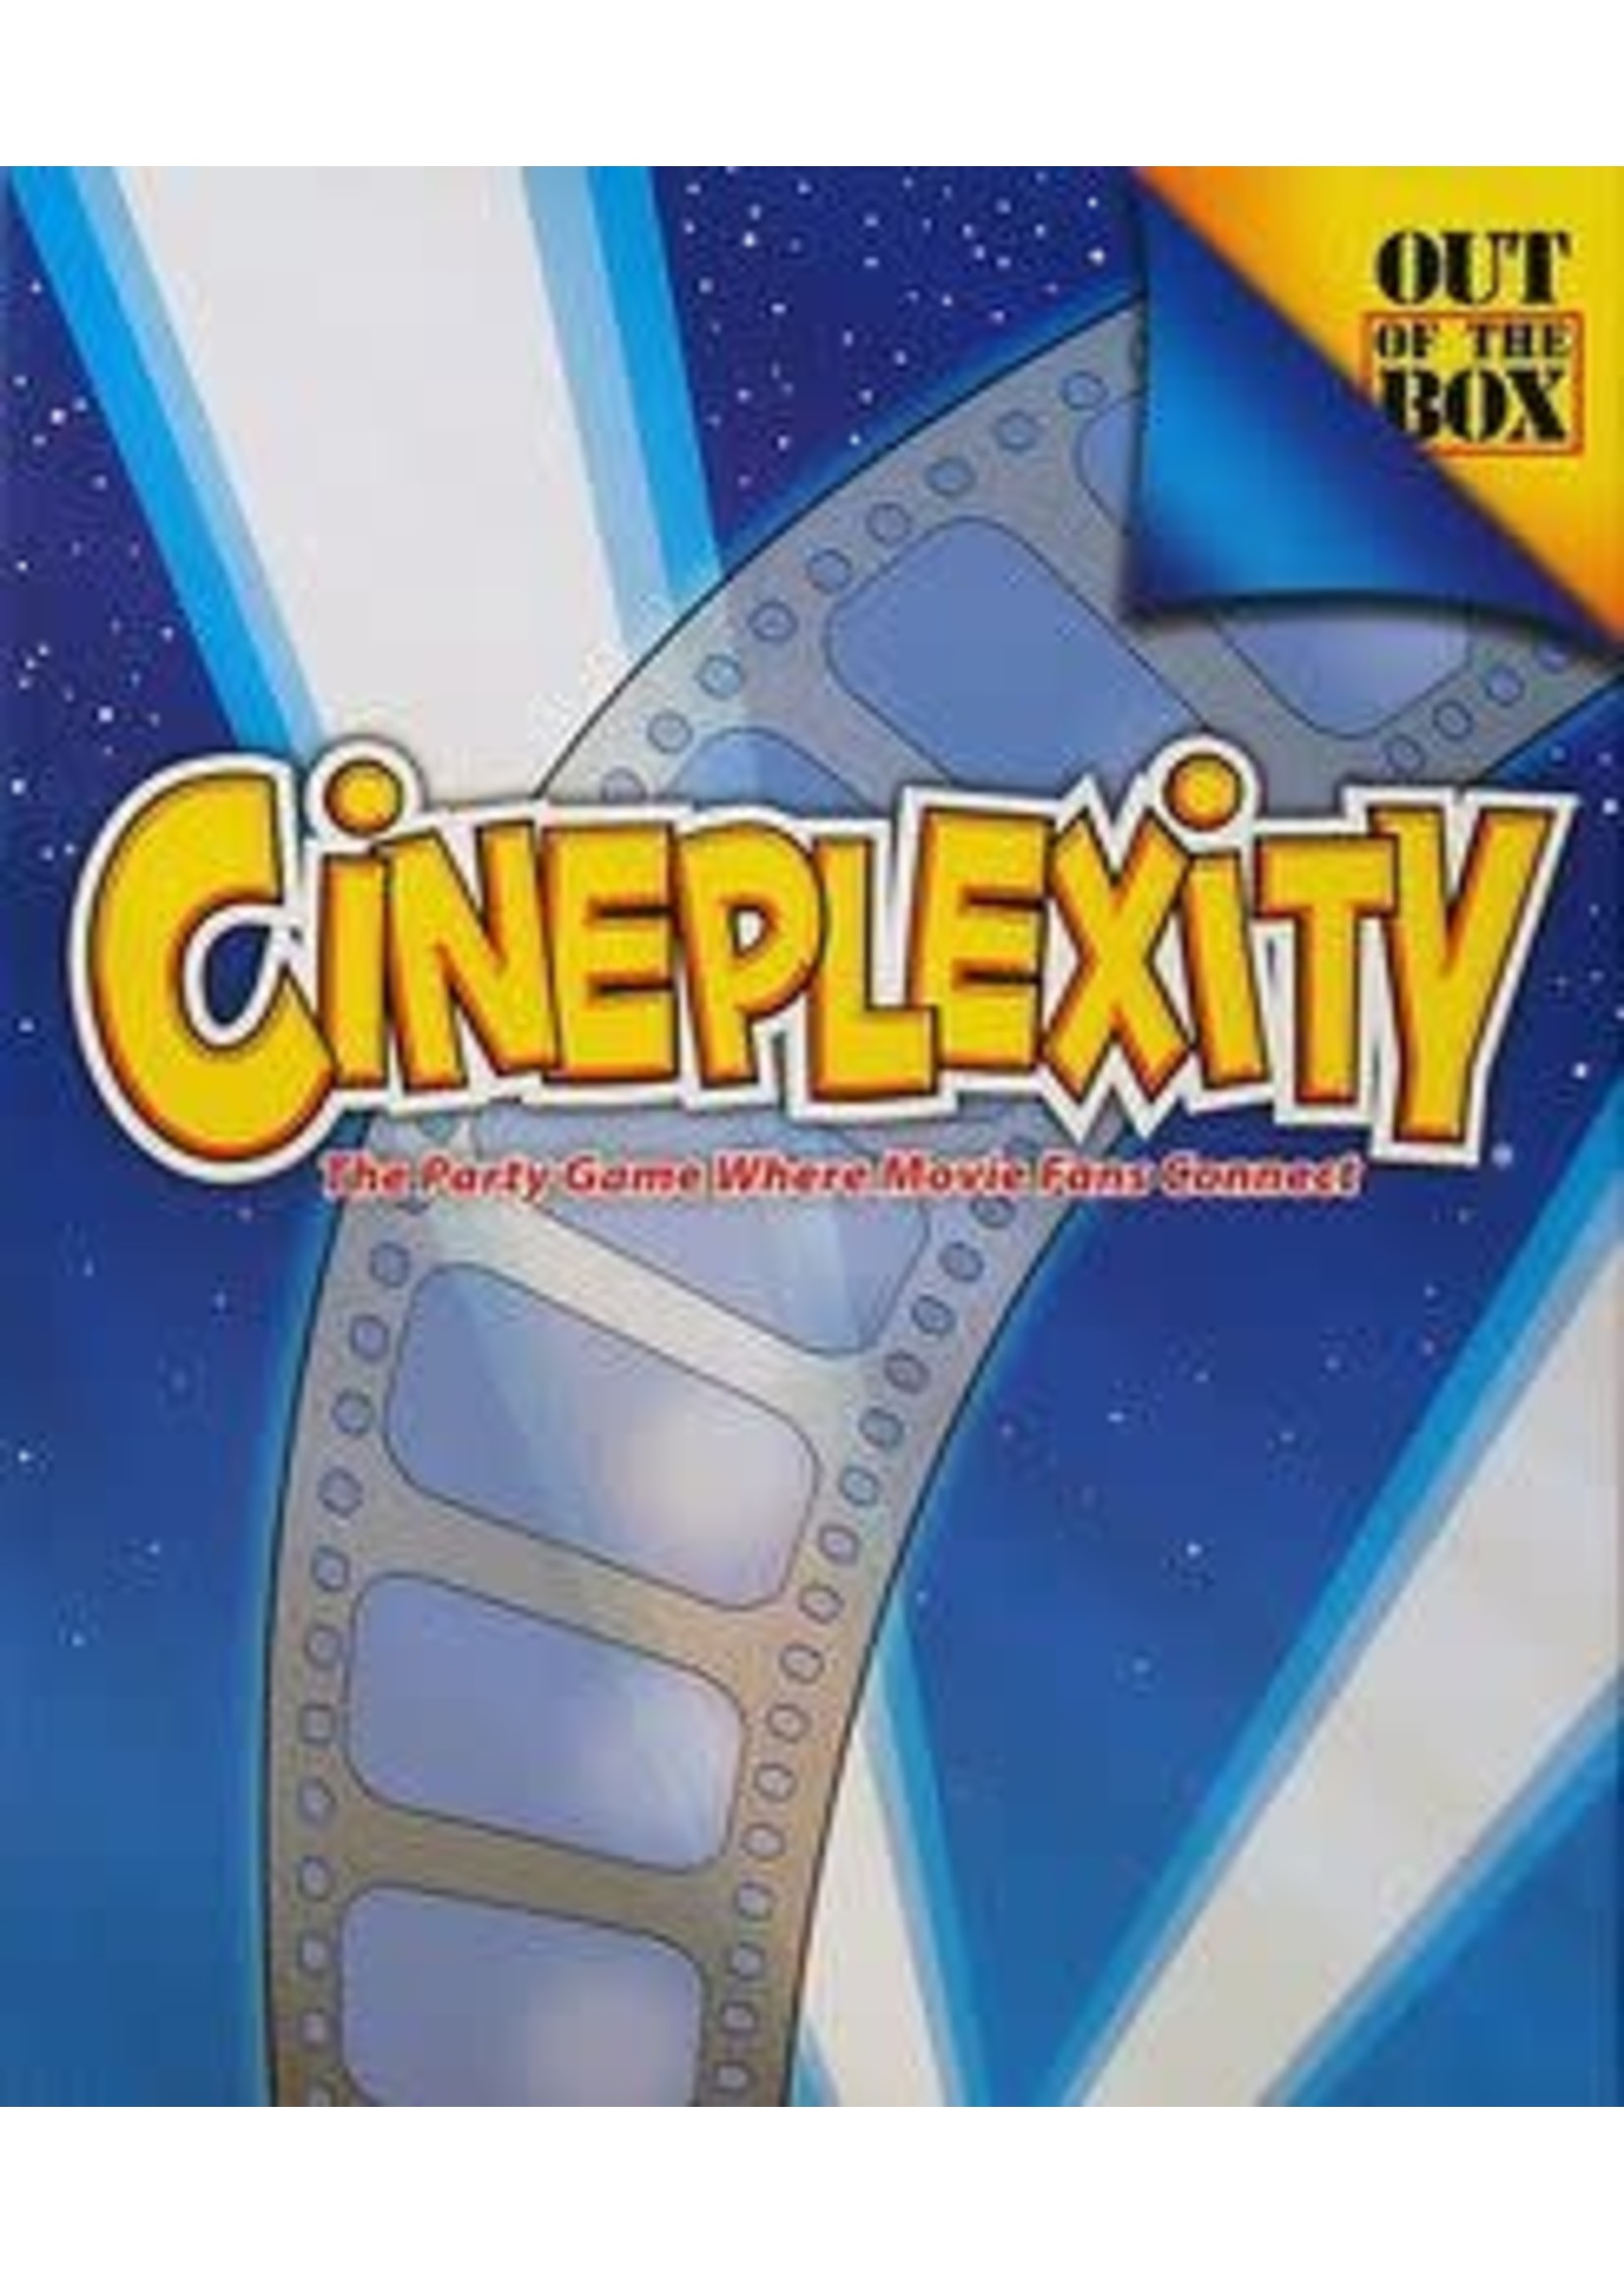 Rental RENTAL - Cineplexity 2 Lb 7.3 oz